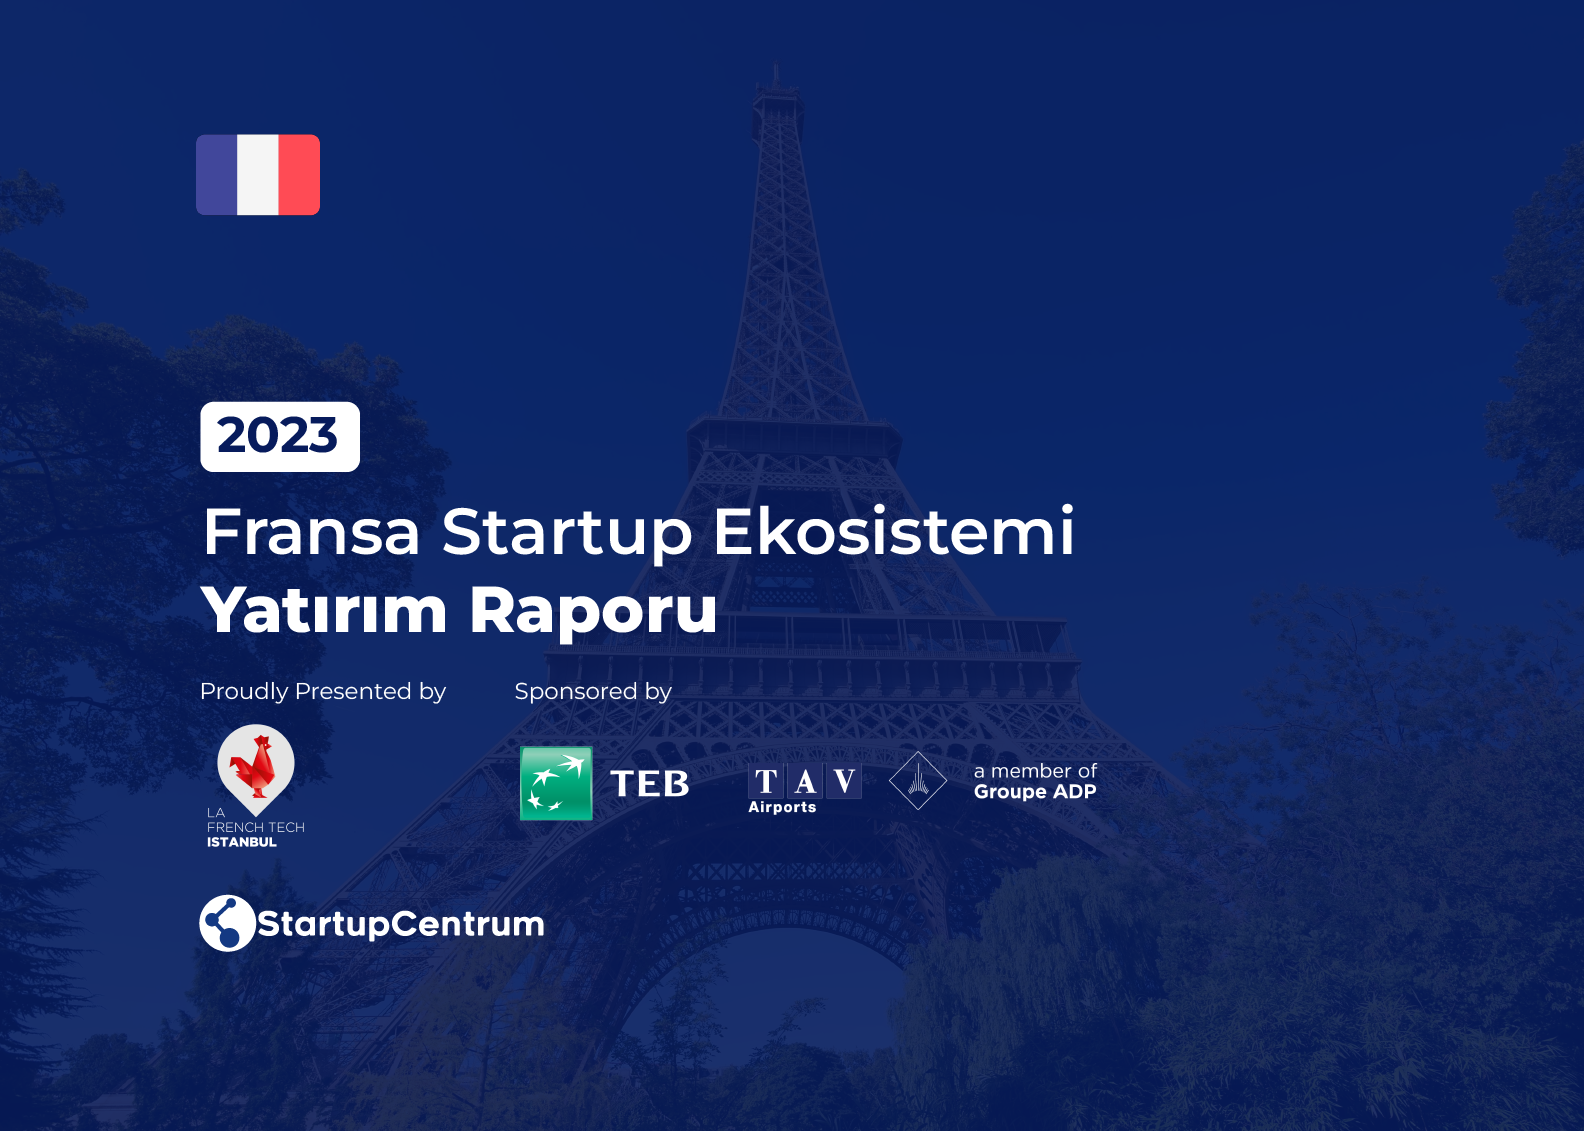 2023 - Fransa Startup Ekosistemi Yatırım Raporu Cover Image